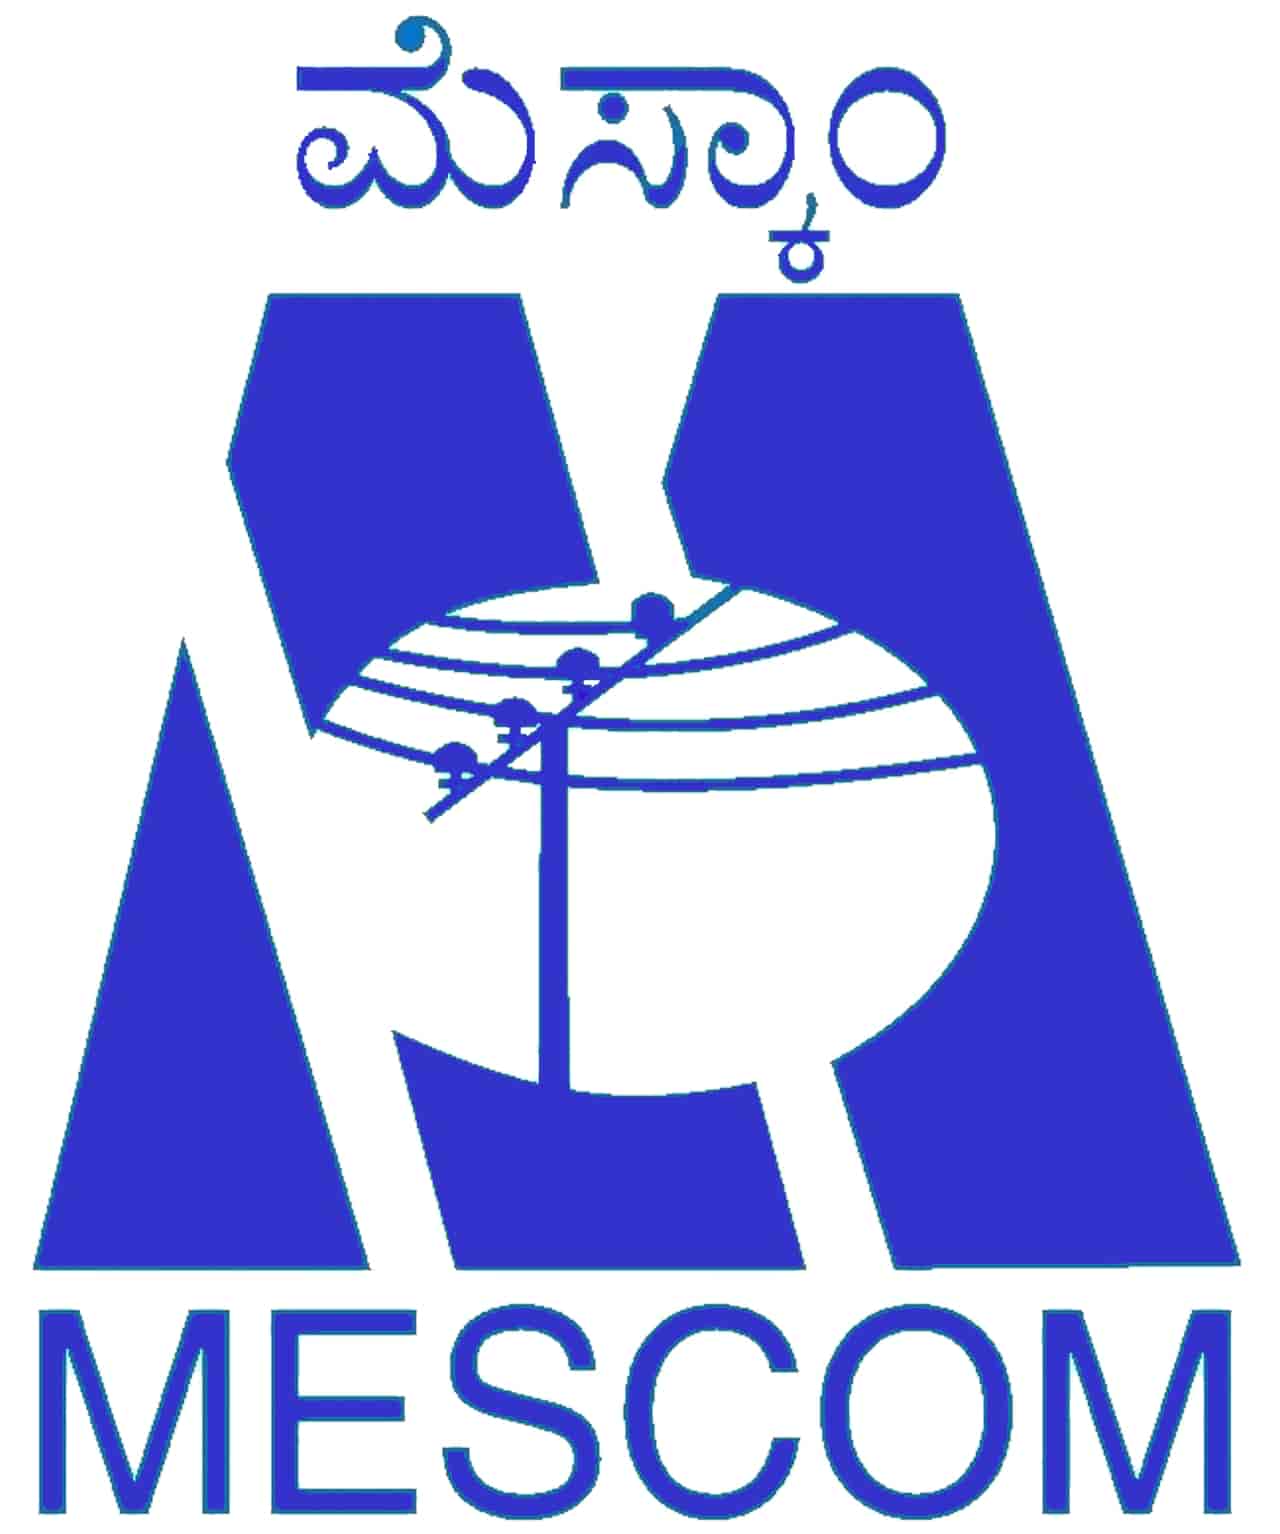 mangalore electricity supply company limited (mescom)